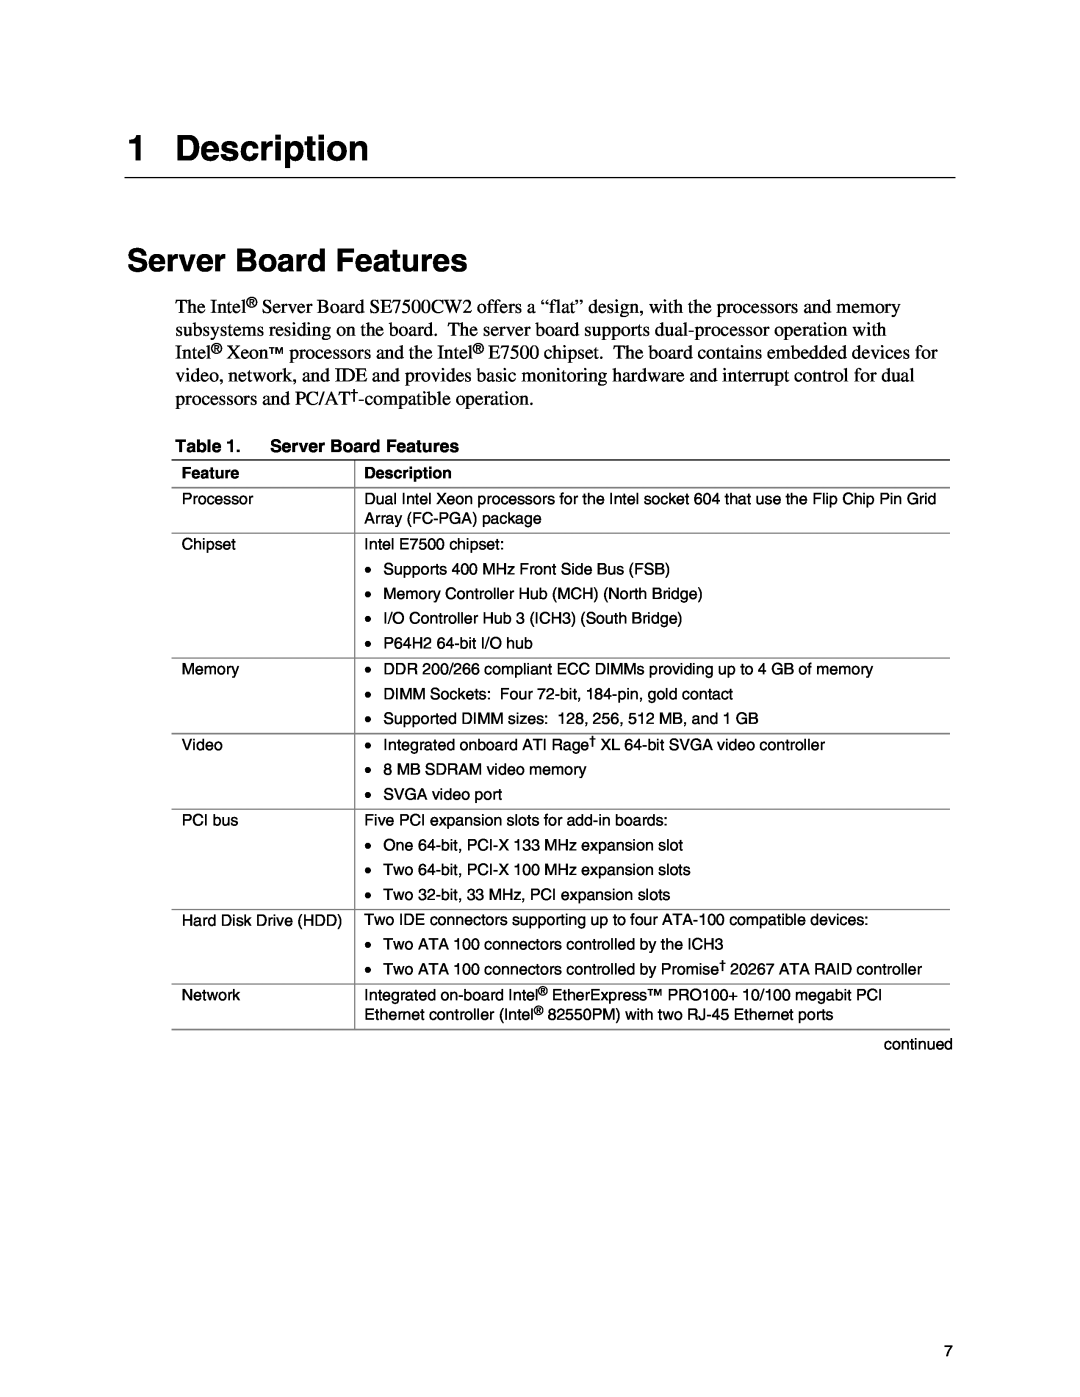 Intel SE7500CW2 manual Description, Server Board Features 